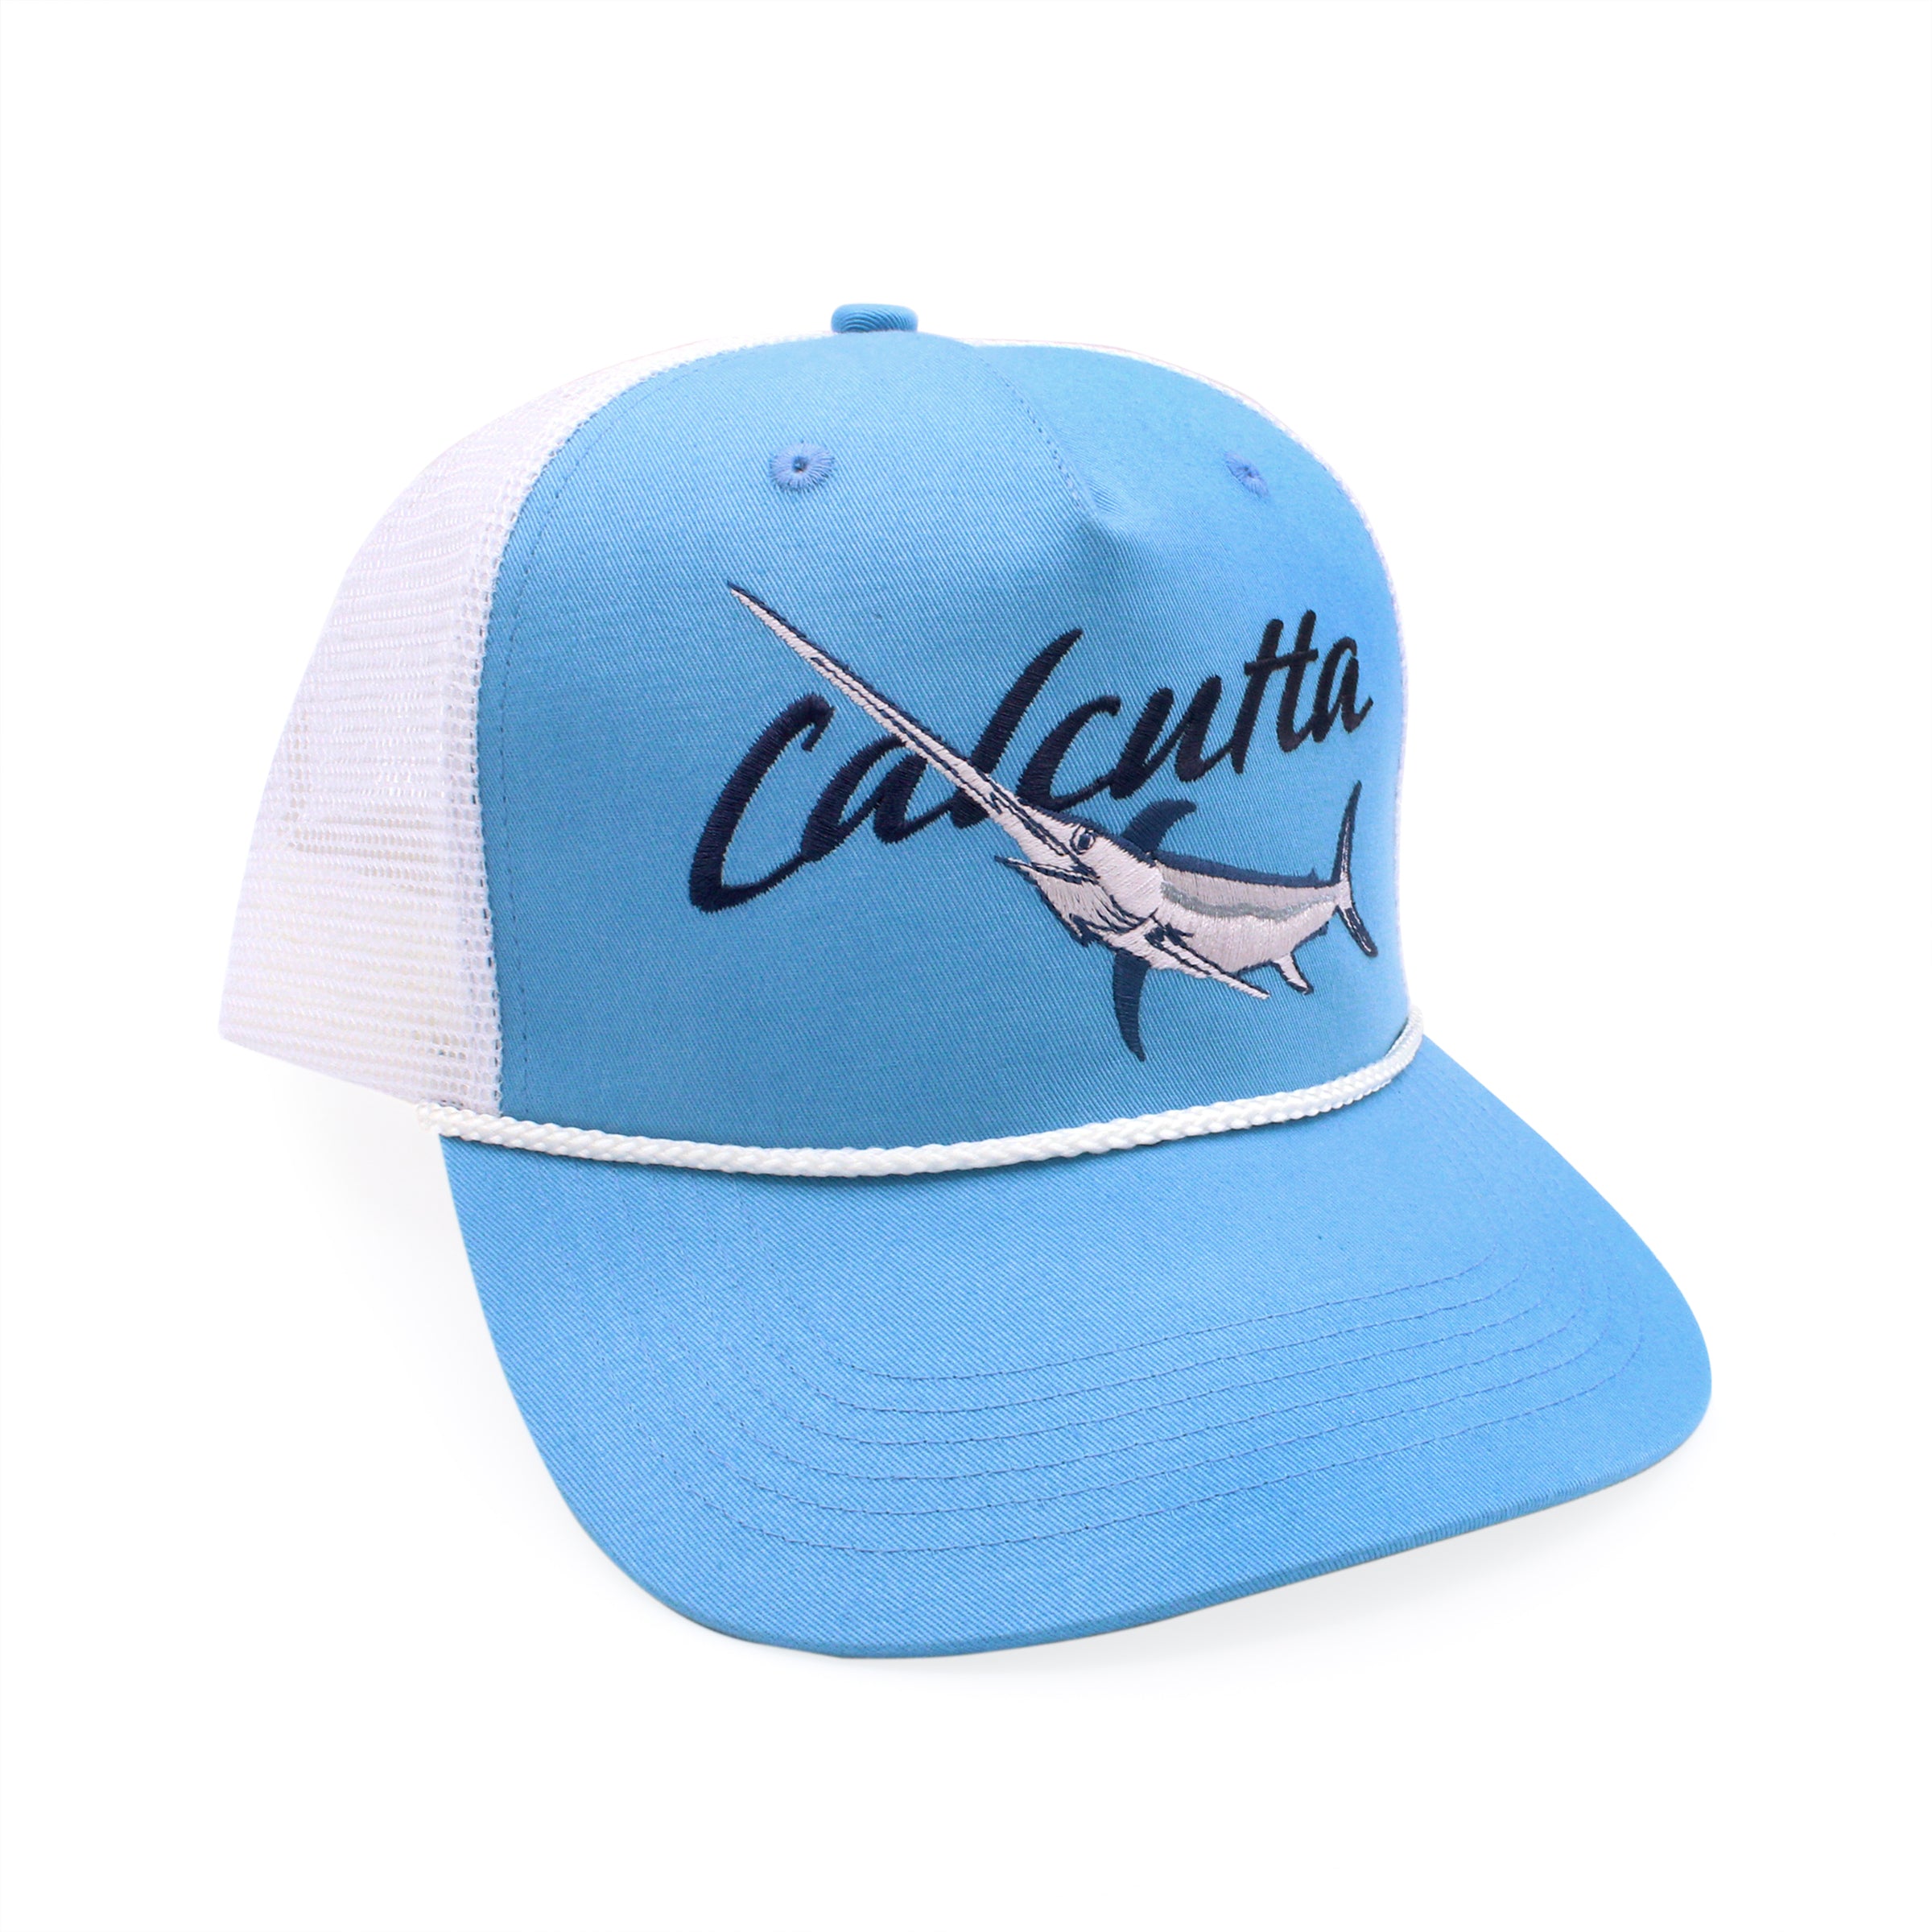 Vintage Vintage Fishing Hat Cap Strapback Blue Tan Fish Fly Shop 90s